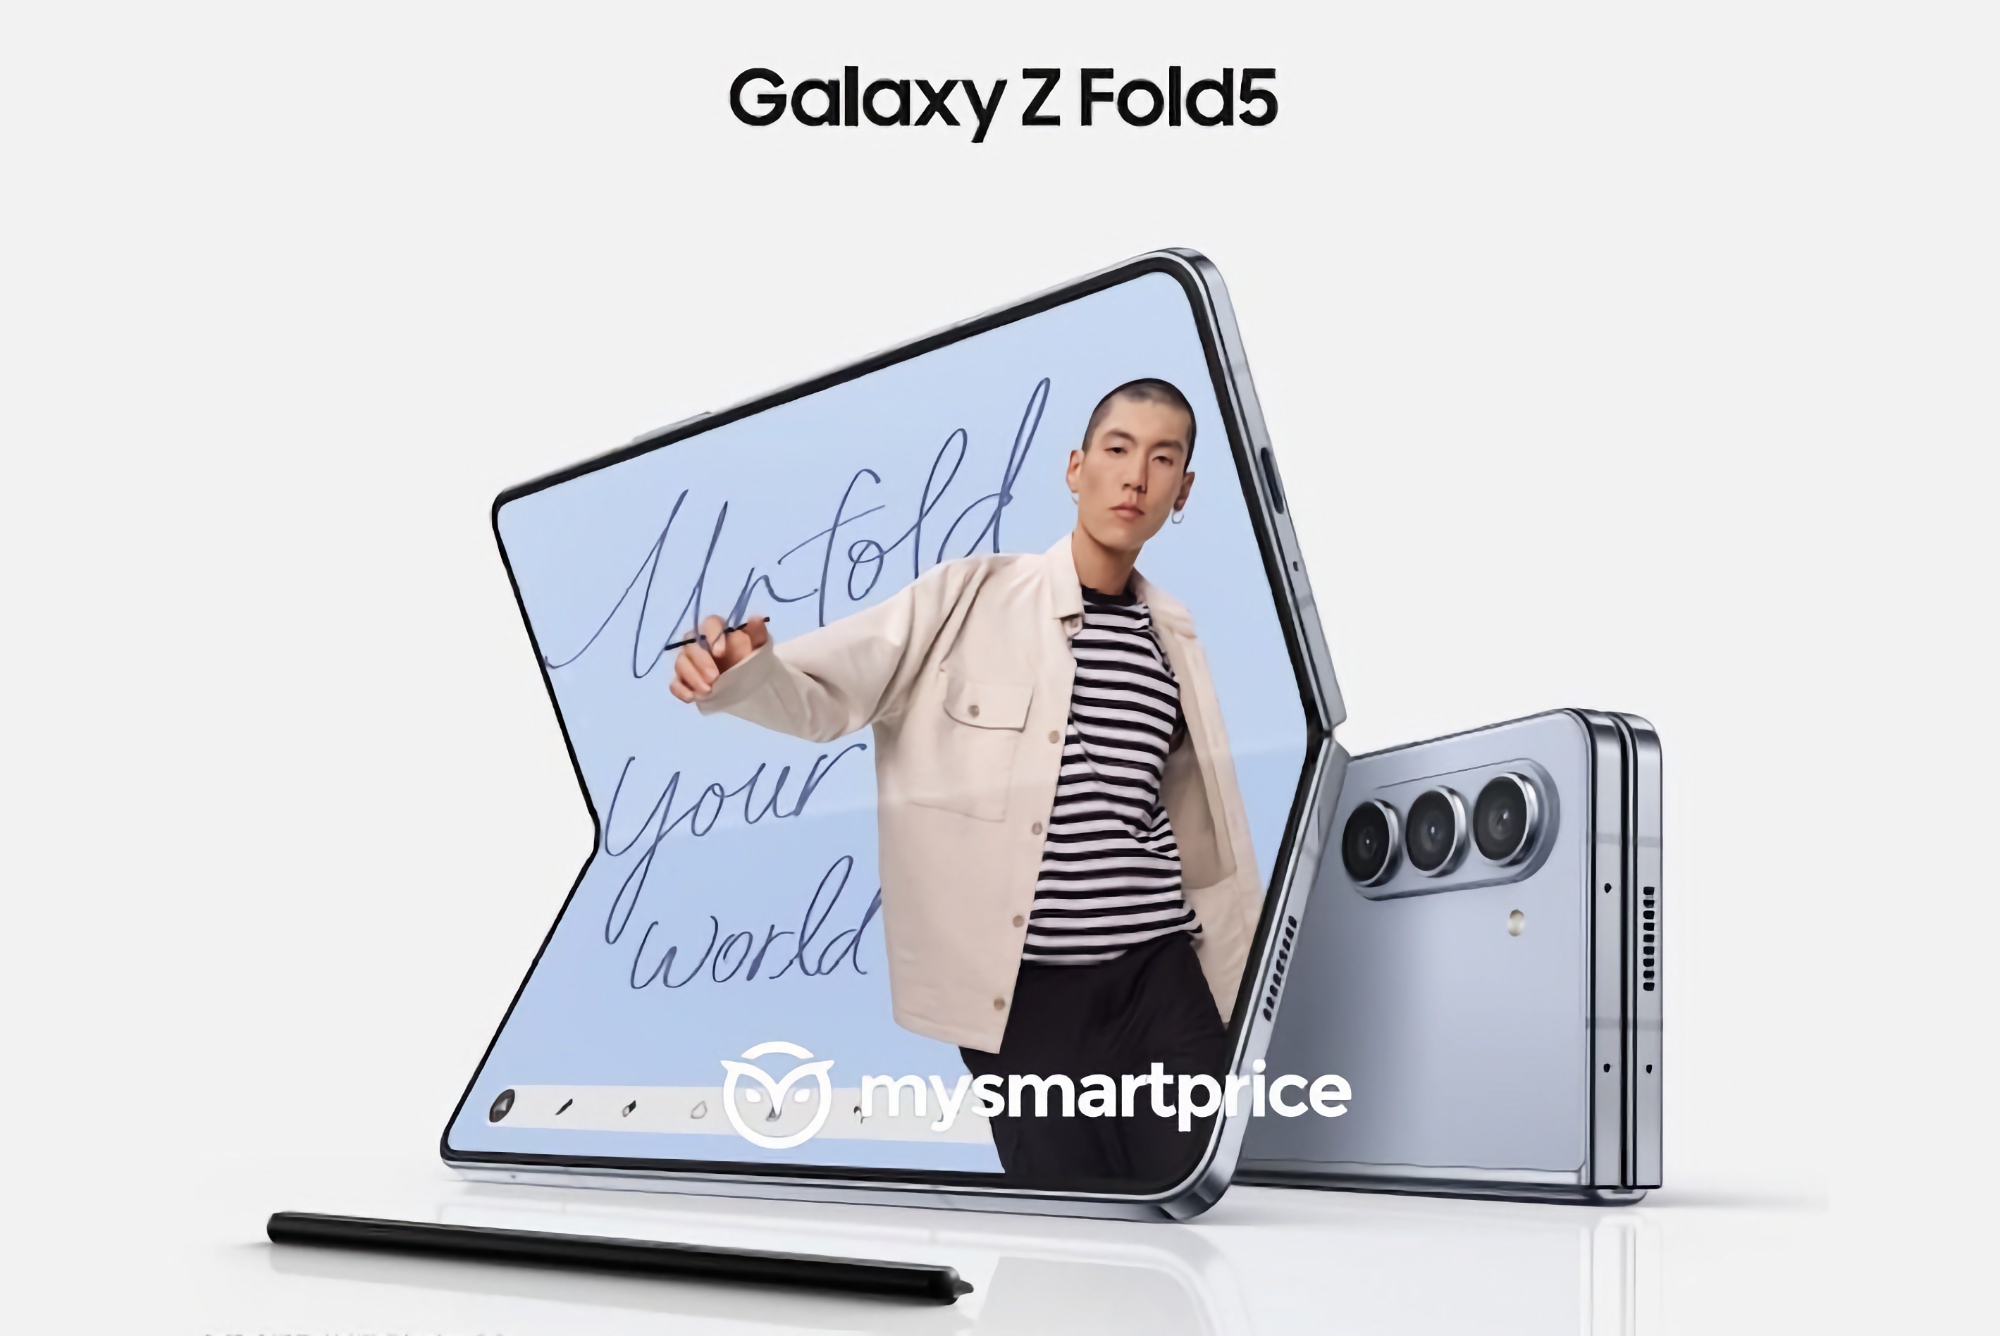 Goedkoper dan de Samsung Galaxy Fold 4: inider onthult hoeveel de opvouwbare Galaxy Fold 5 smartphone gaat kosten